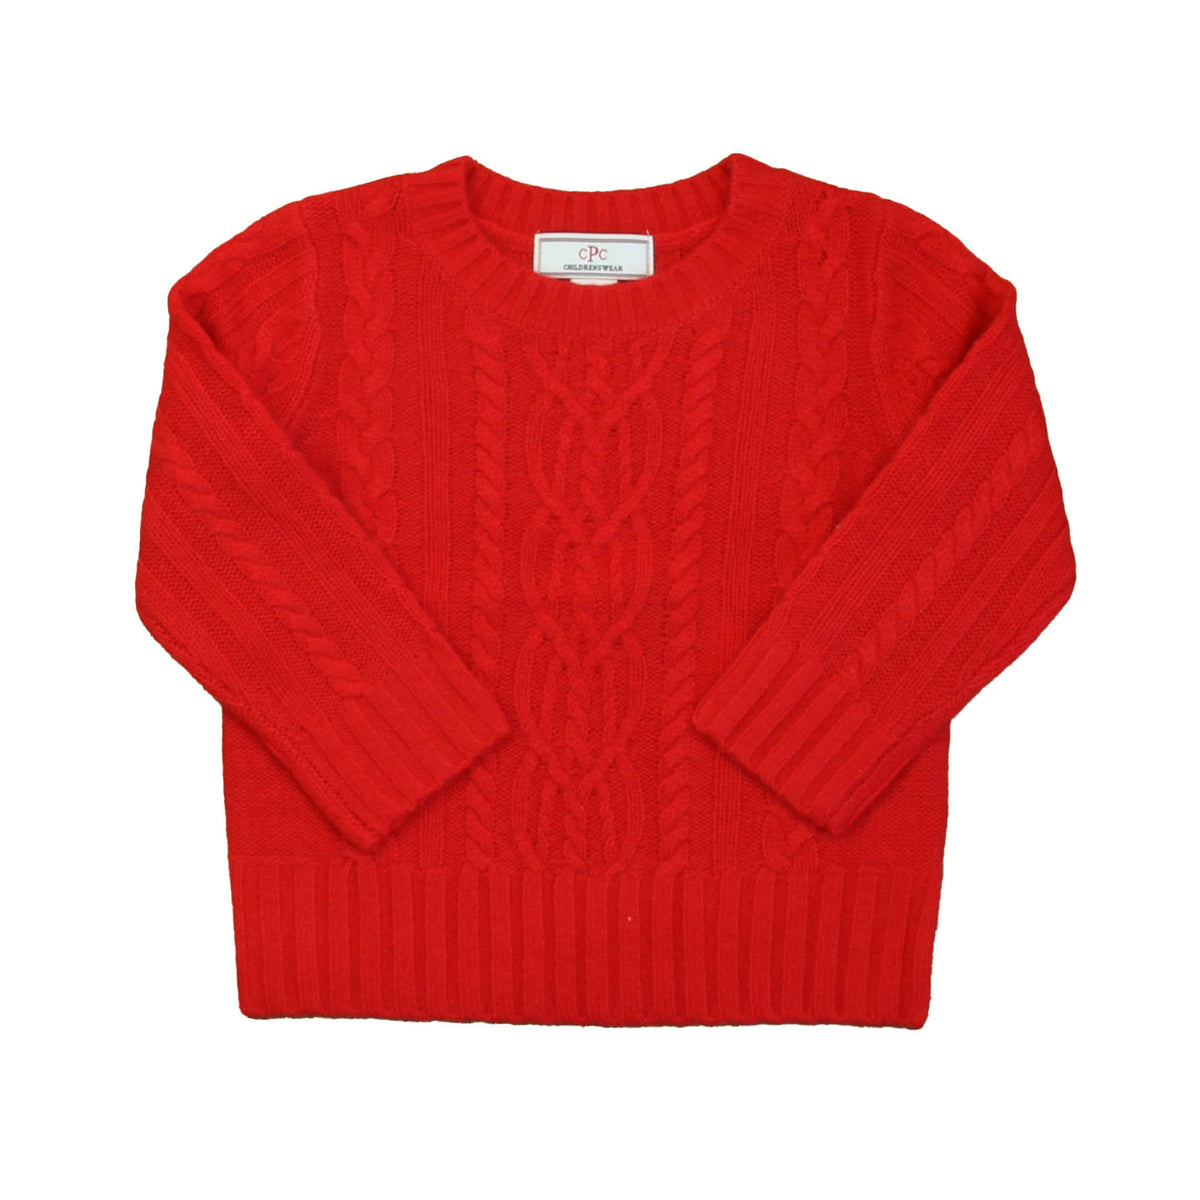 New with Tags: Orangeade Sweater -- FINAL SALE